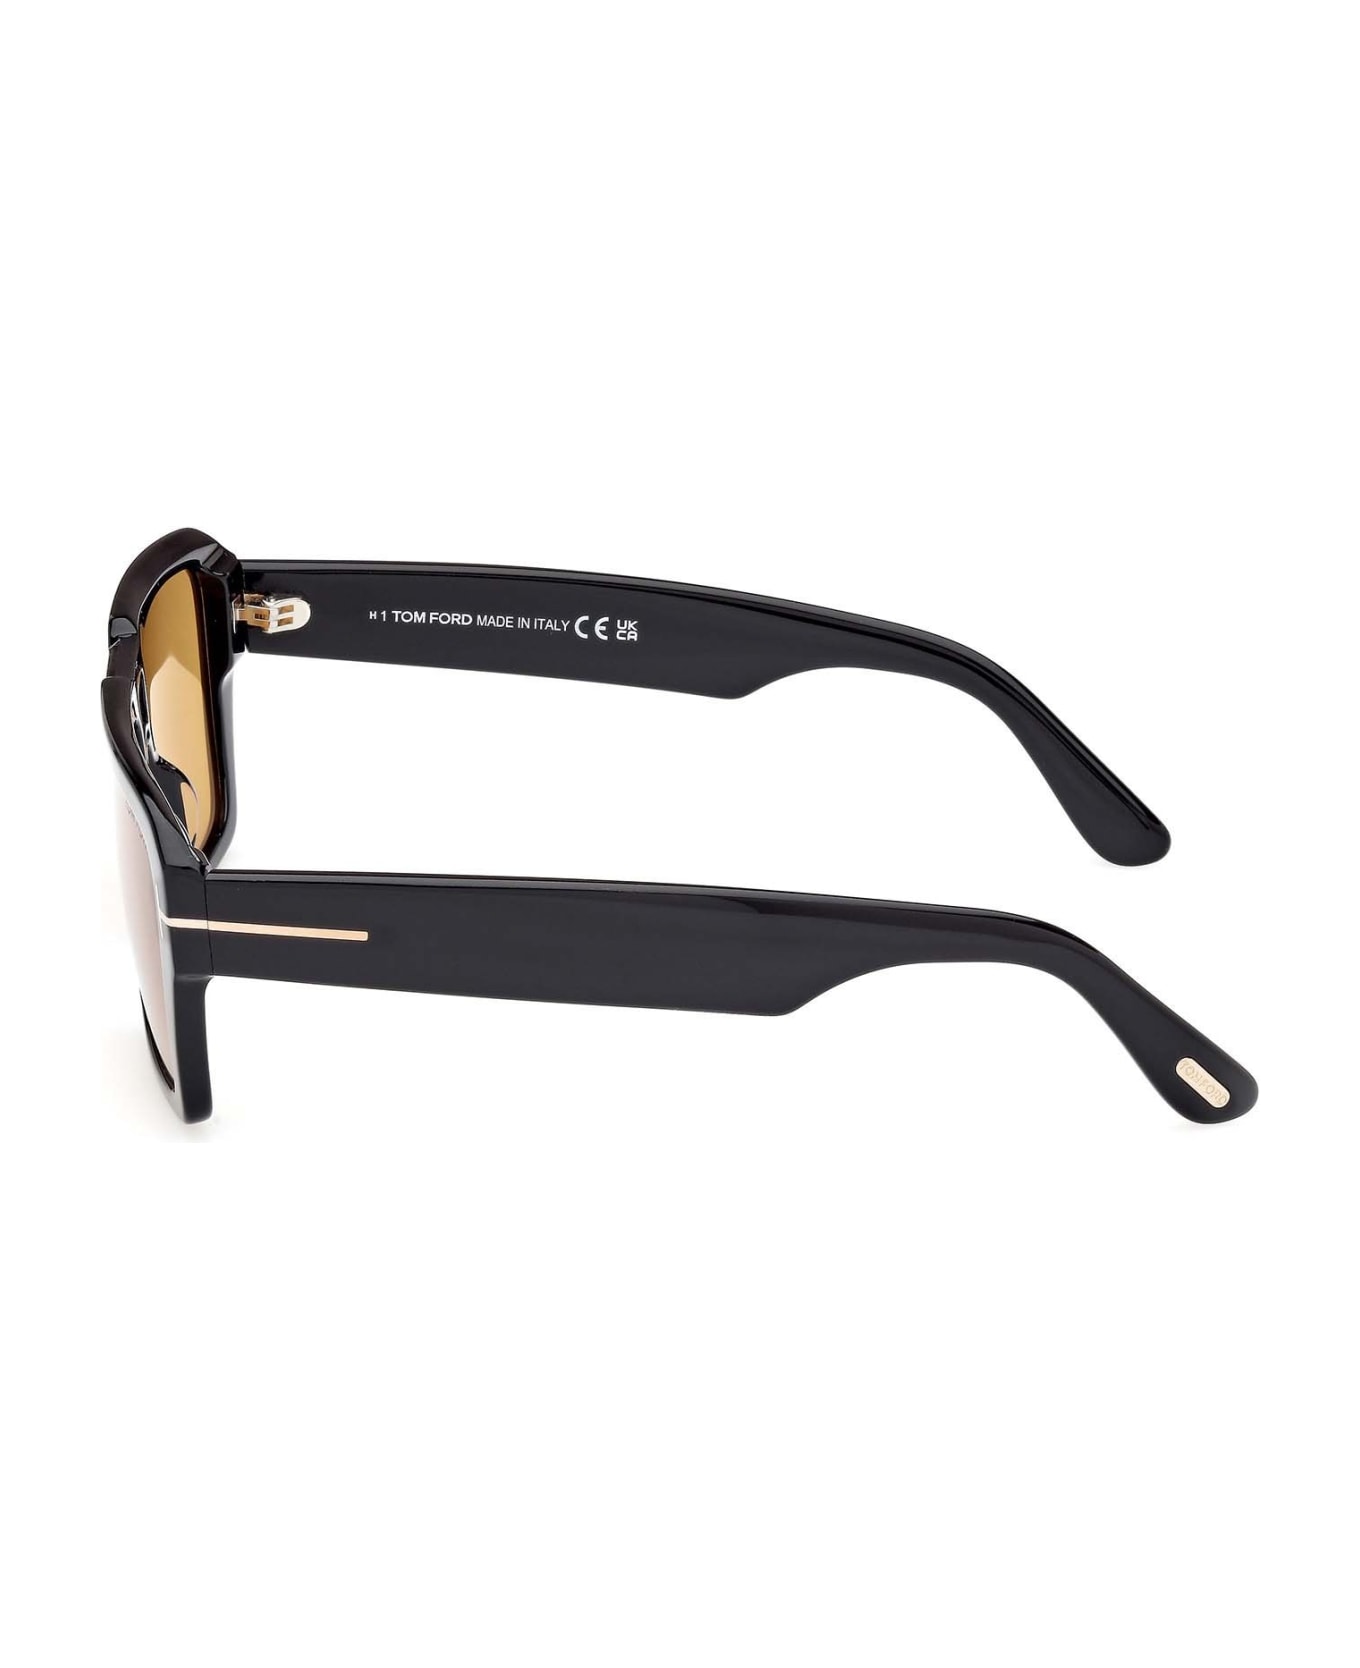 Tom Ford Eyewear Sunglasses - Nero/Marrone サングラス